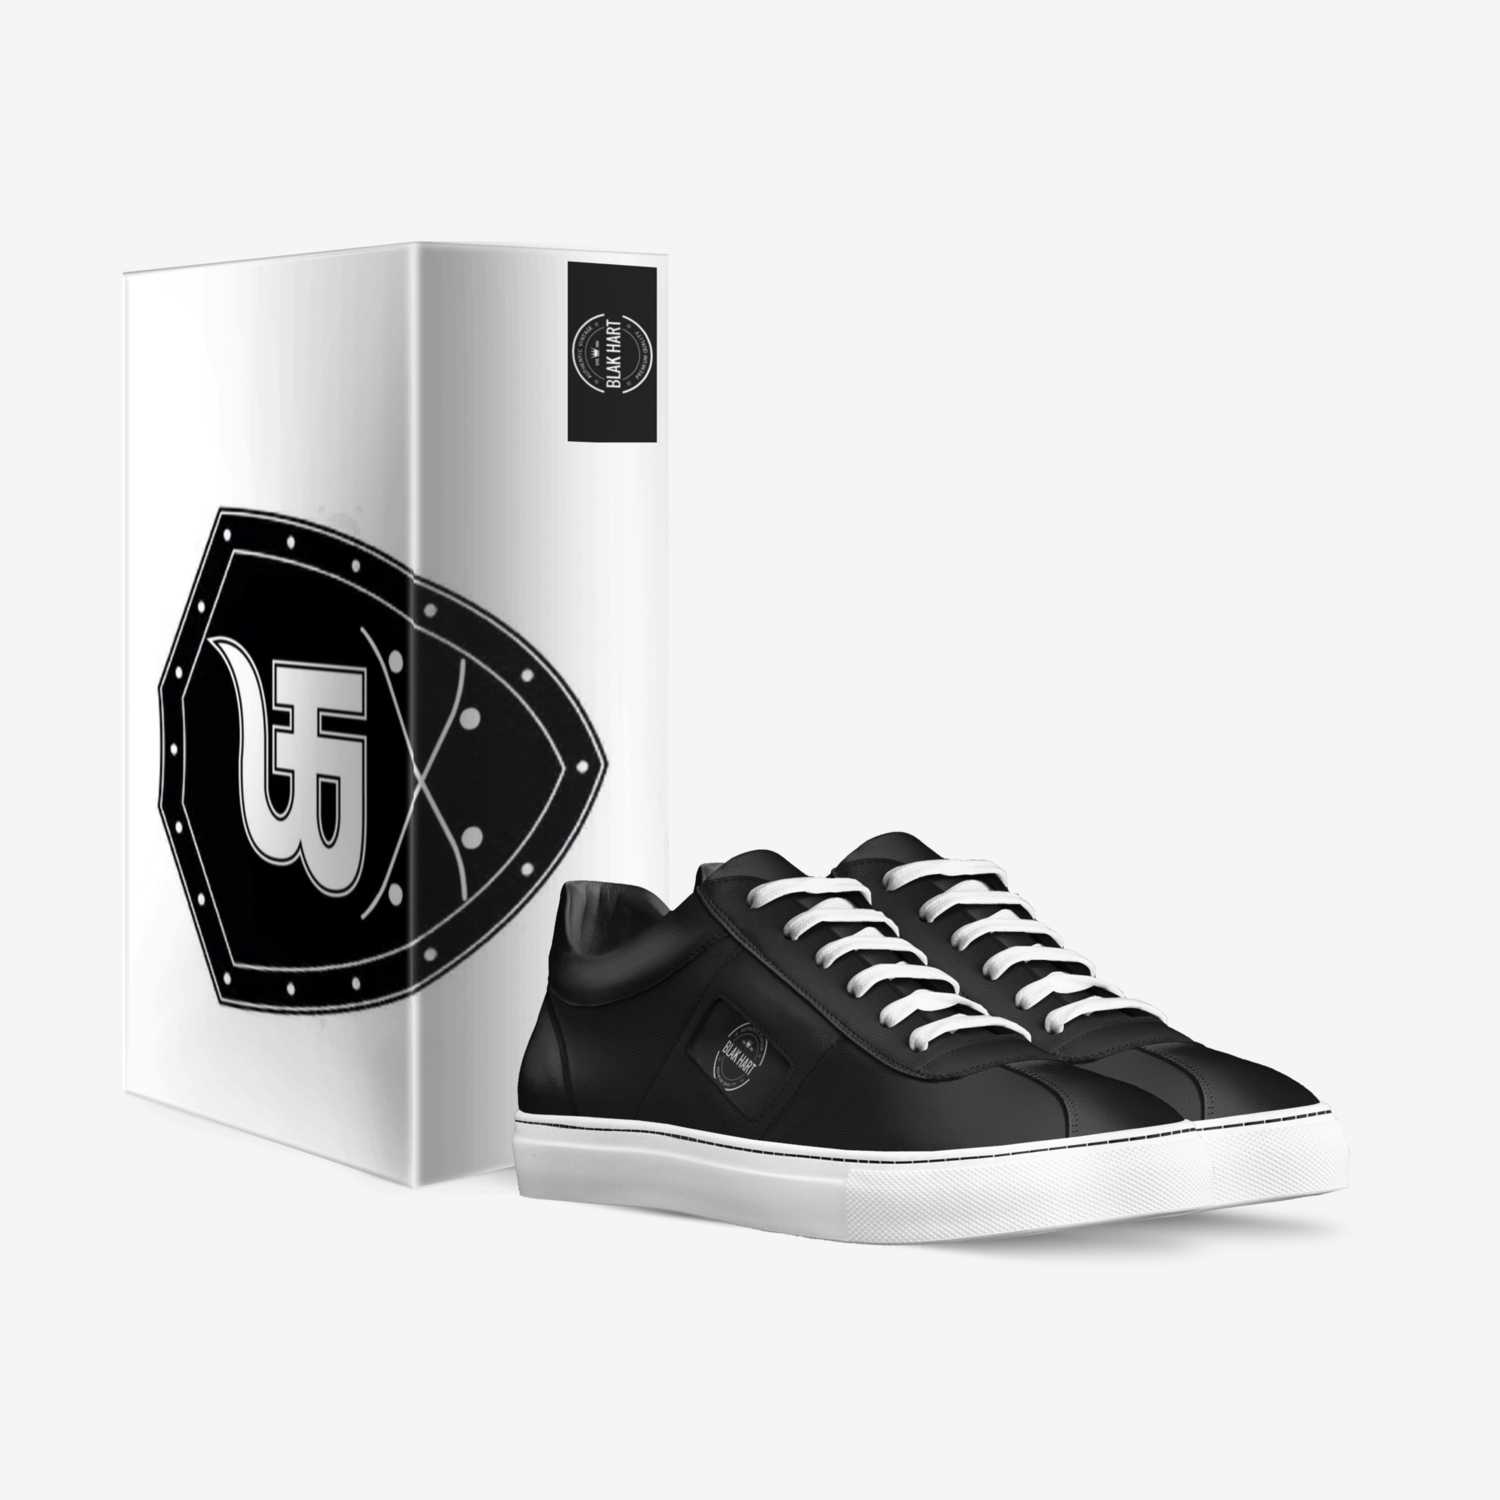 Blak Hart custom made in Italy shoes by Uryjah Styles | Box view